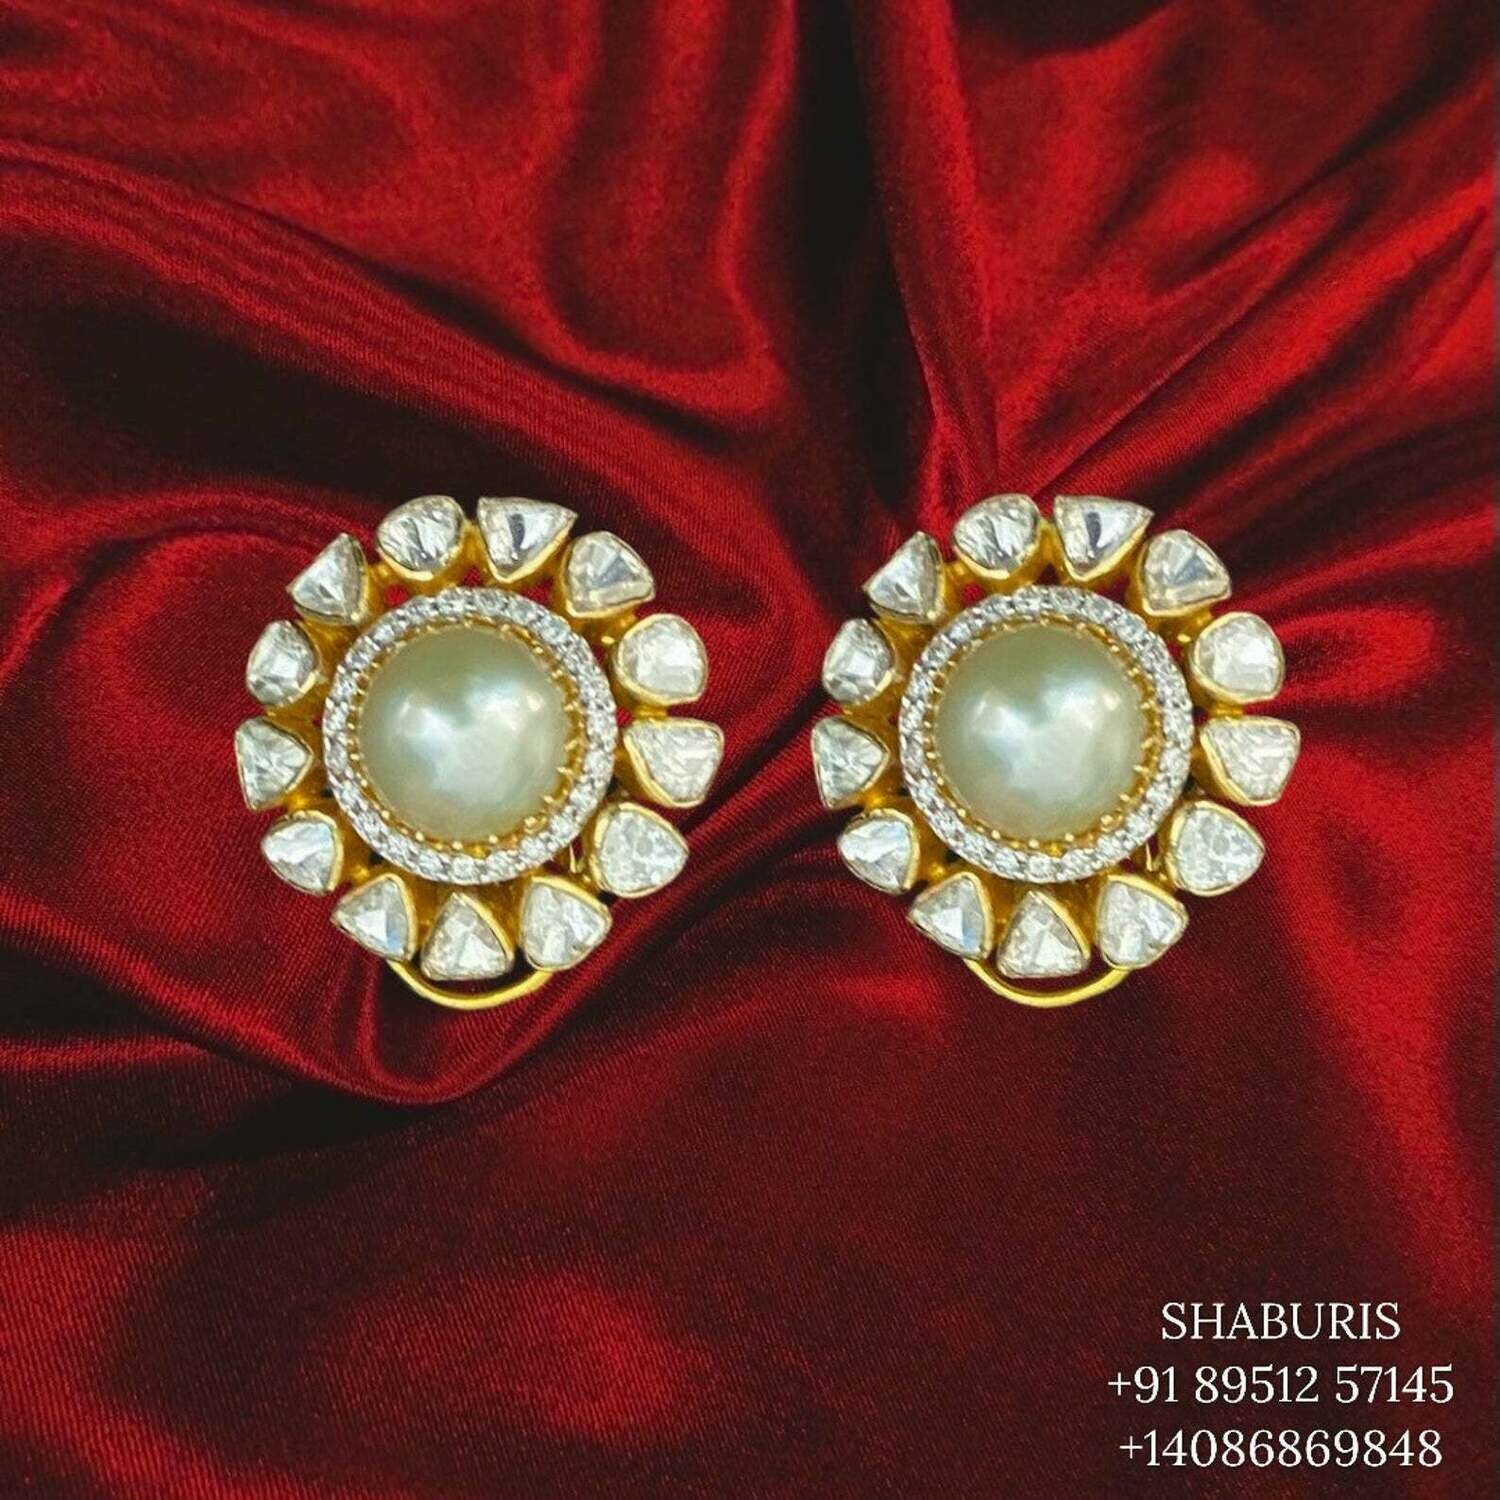 Pearl jewelry,Swarovski Diamond Jhumka Jewelry Designs,South Indian Jewelry,Jhumka Earrings,Jhumki,latest indian jewellery Designs -NIHIRA